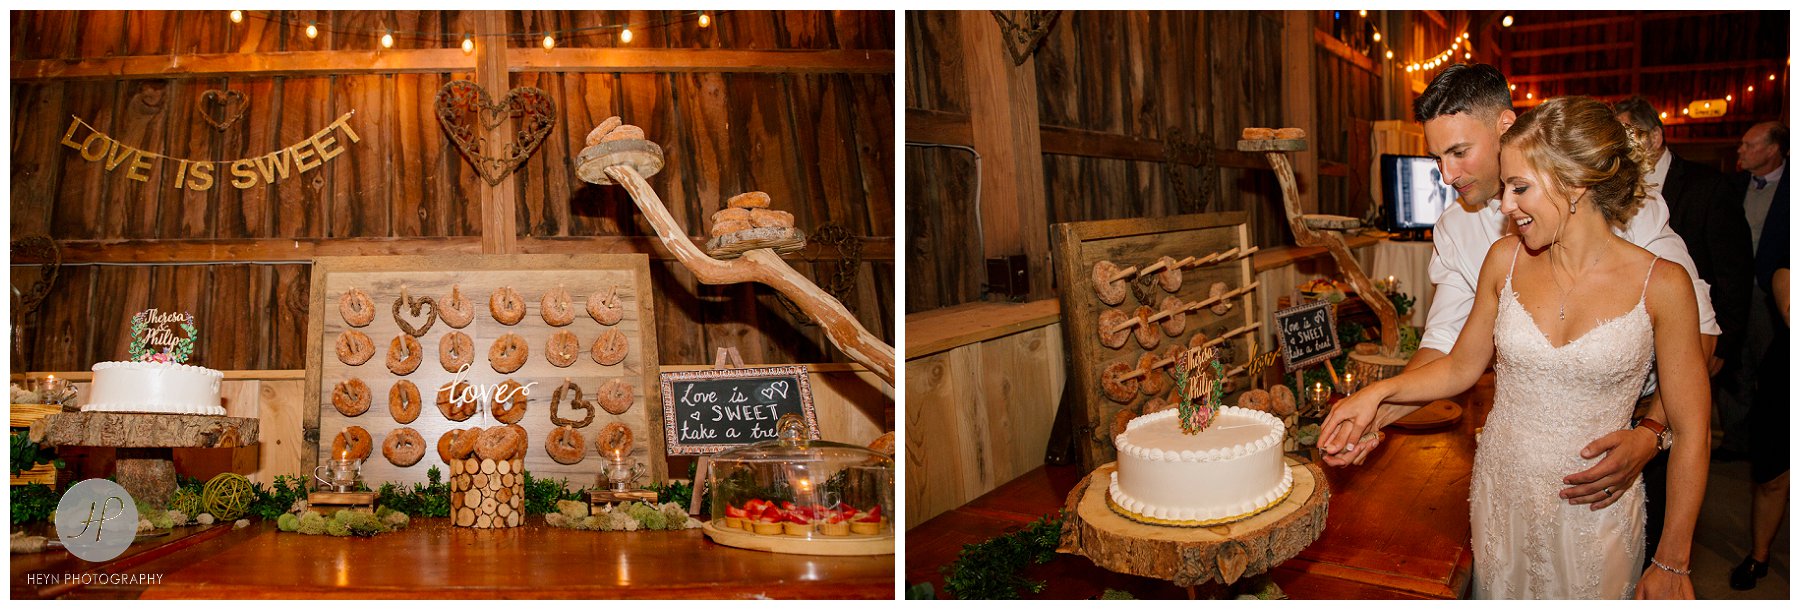 bride and groom cake cutting at barn reception at stone tavern farm wedding in the catskills new york